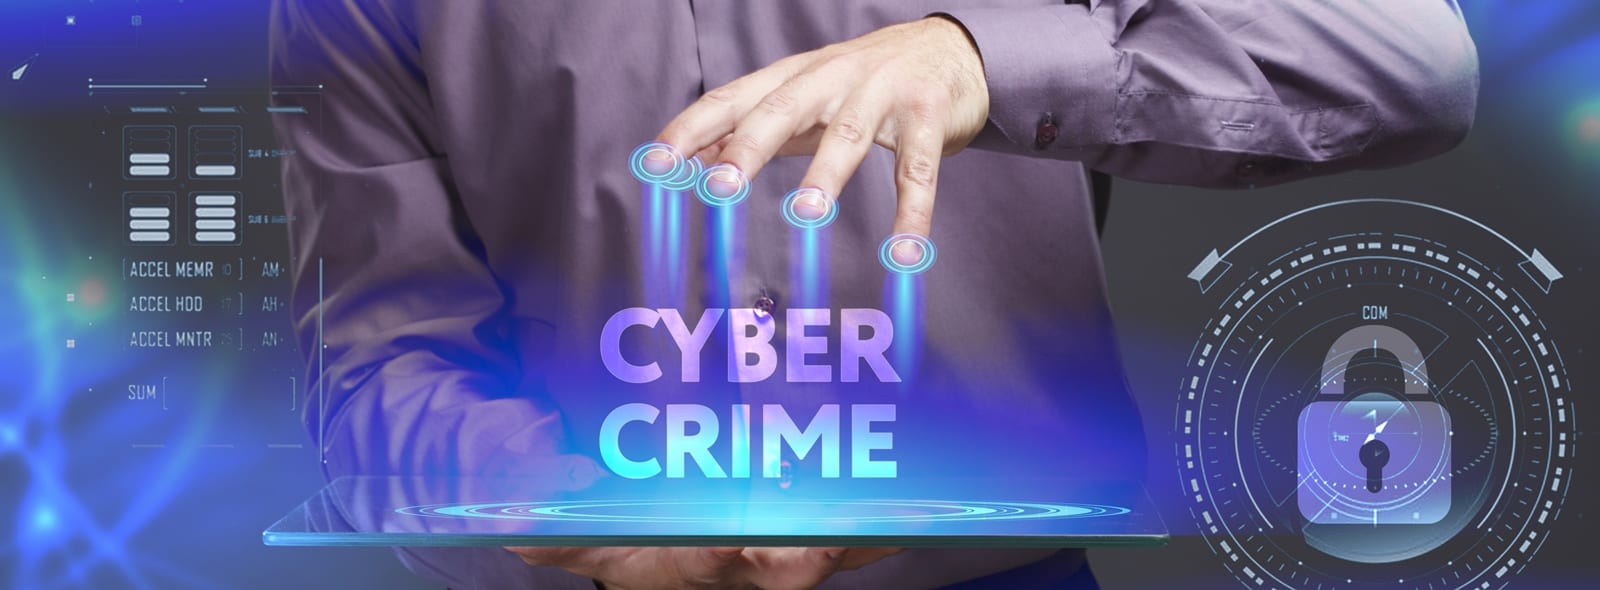 Cyber Crime A Major Concern For Police